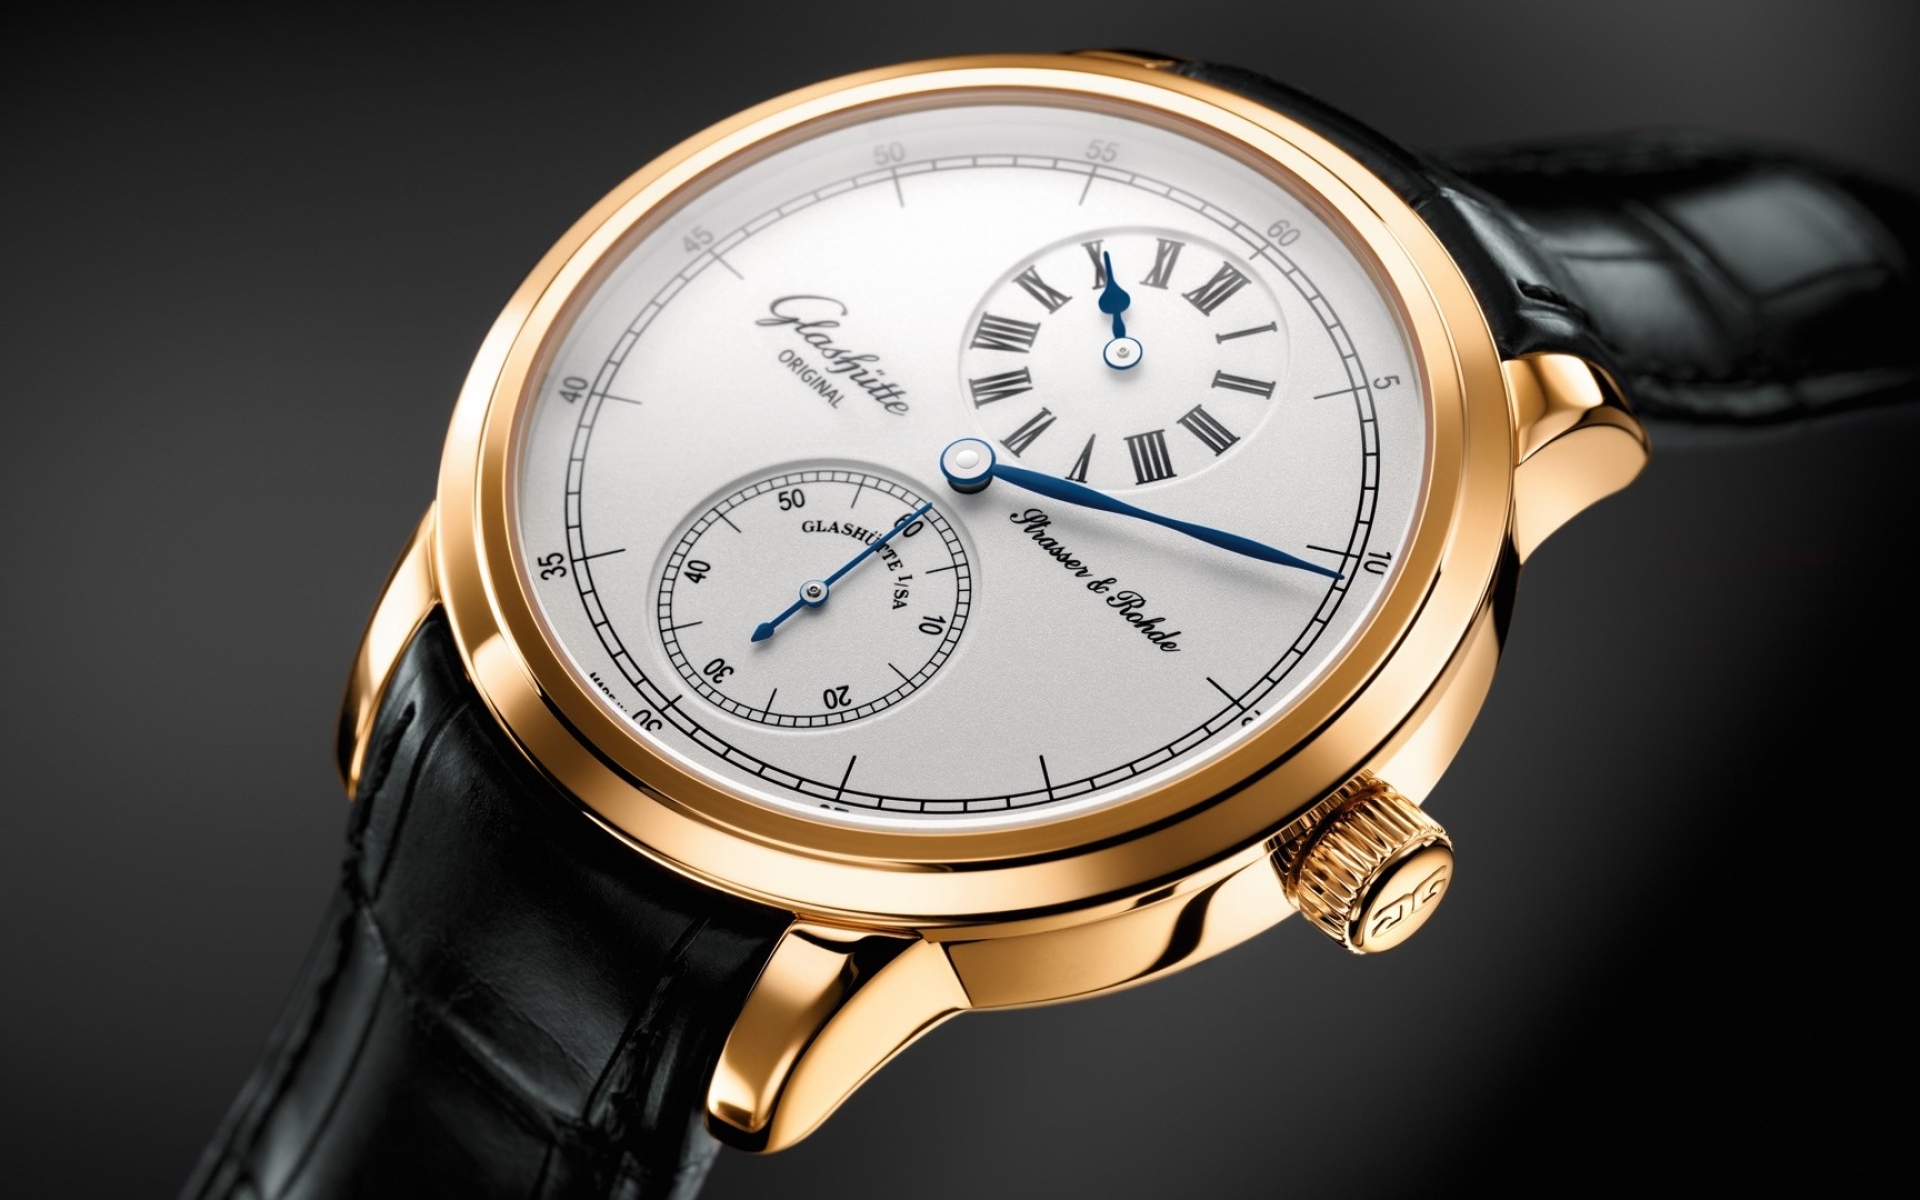 Watch in original. Швейцарские часы. Красивые наручные часы мужские. Часы наручные швейцарские. Элитные швейцарские часы.